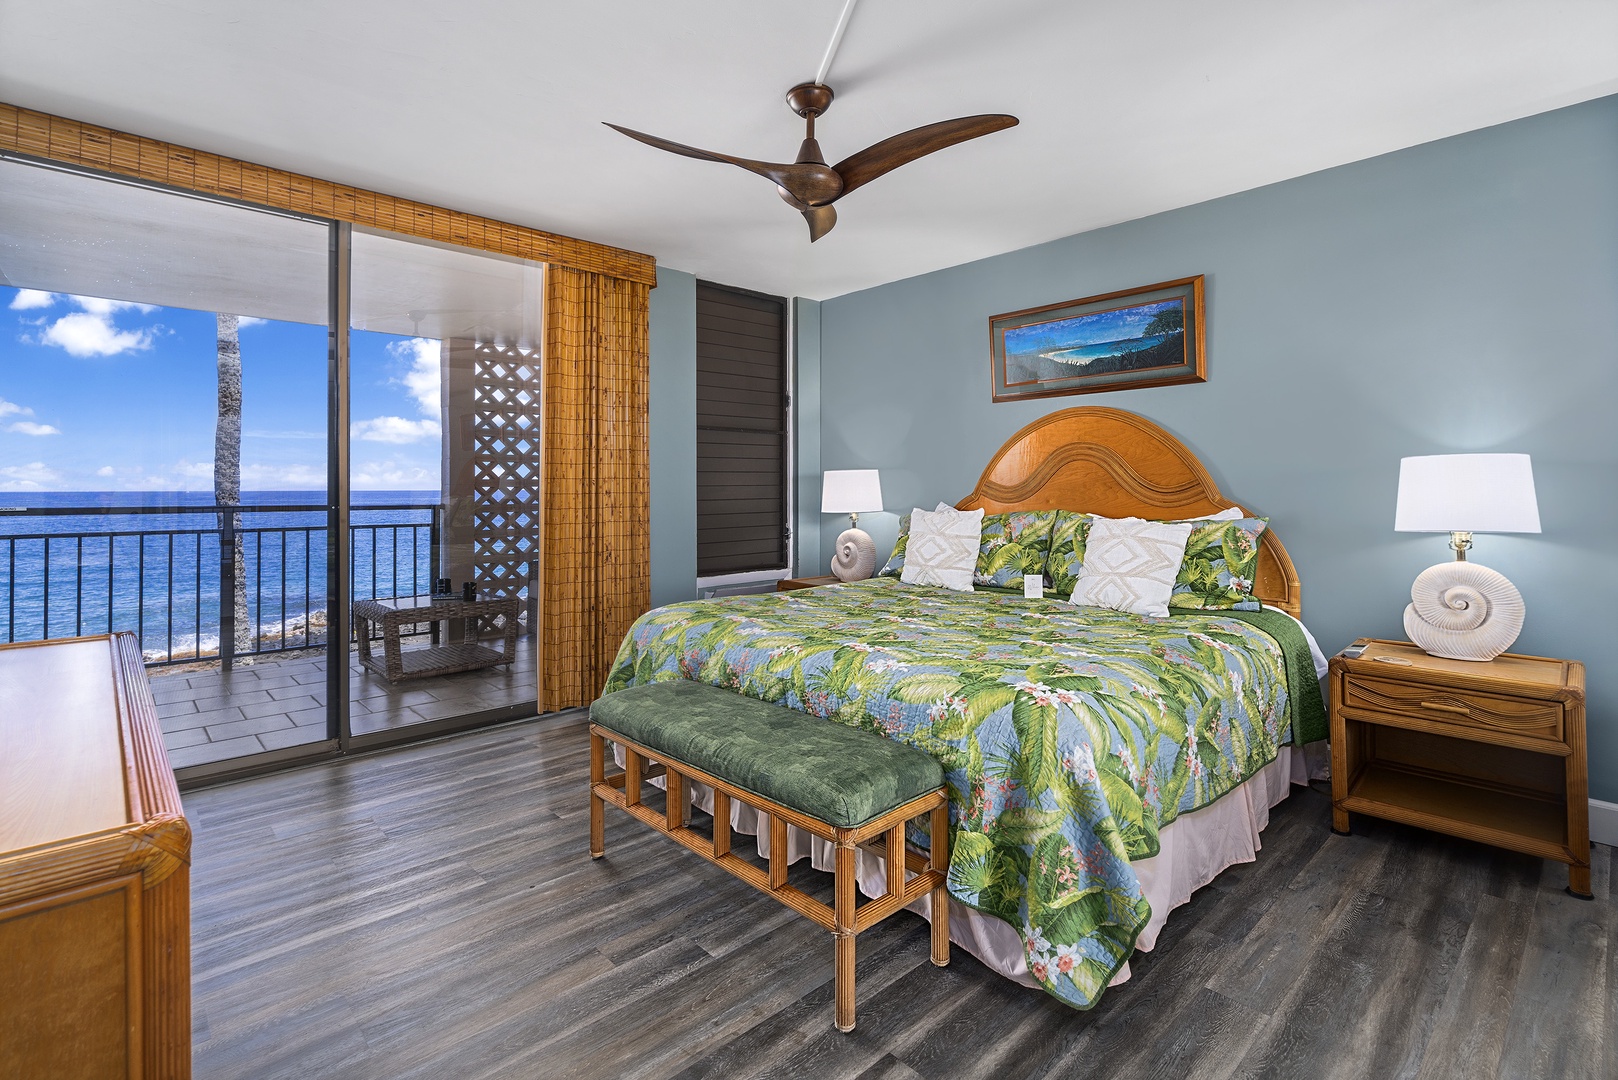 Kailua Kona Vacation Rentals, Kona Makai 6201 - King Sleep Number bed equipped Primary bedroom